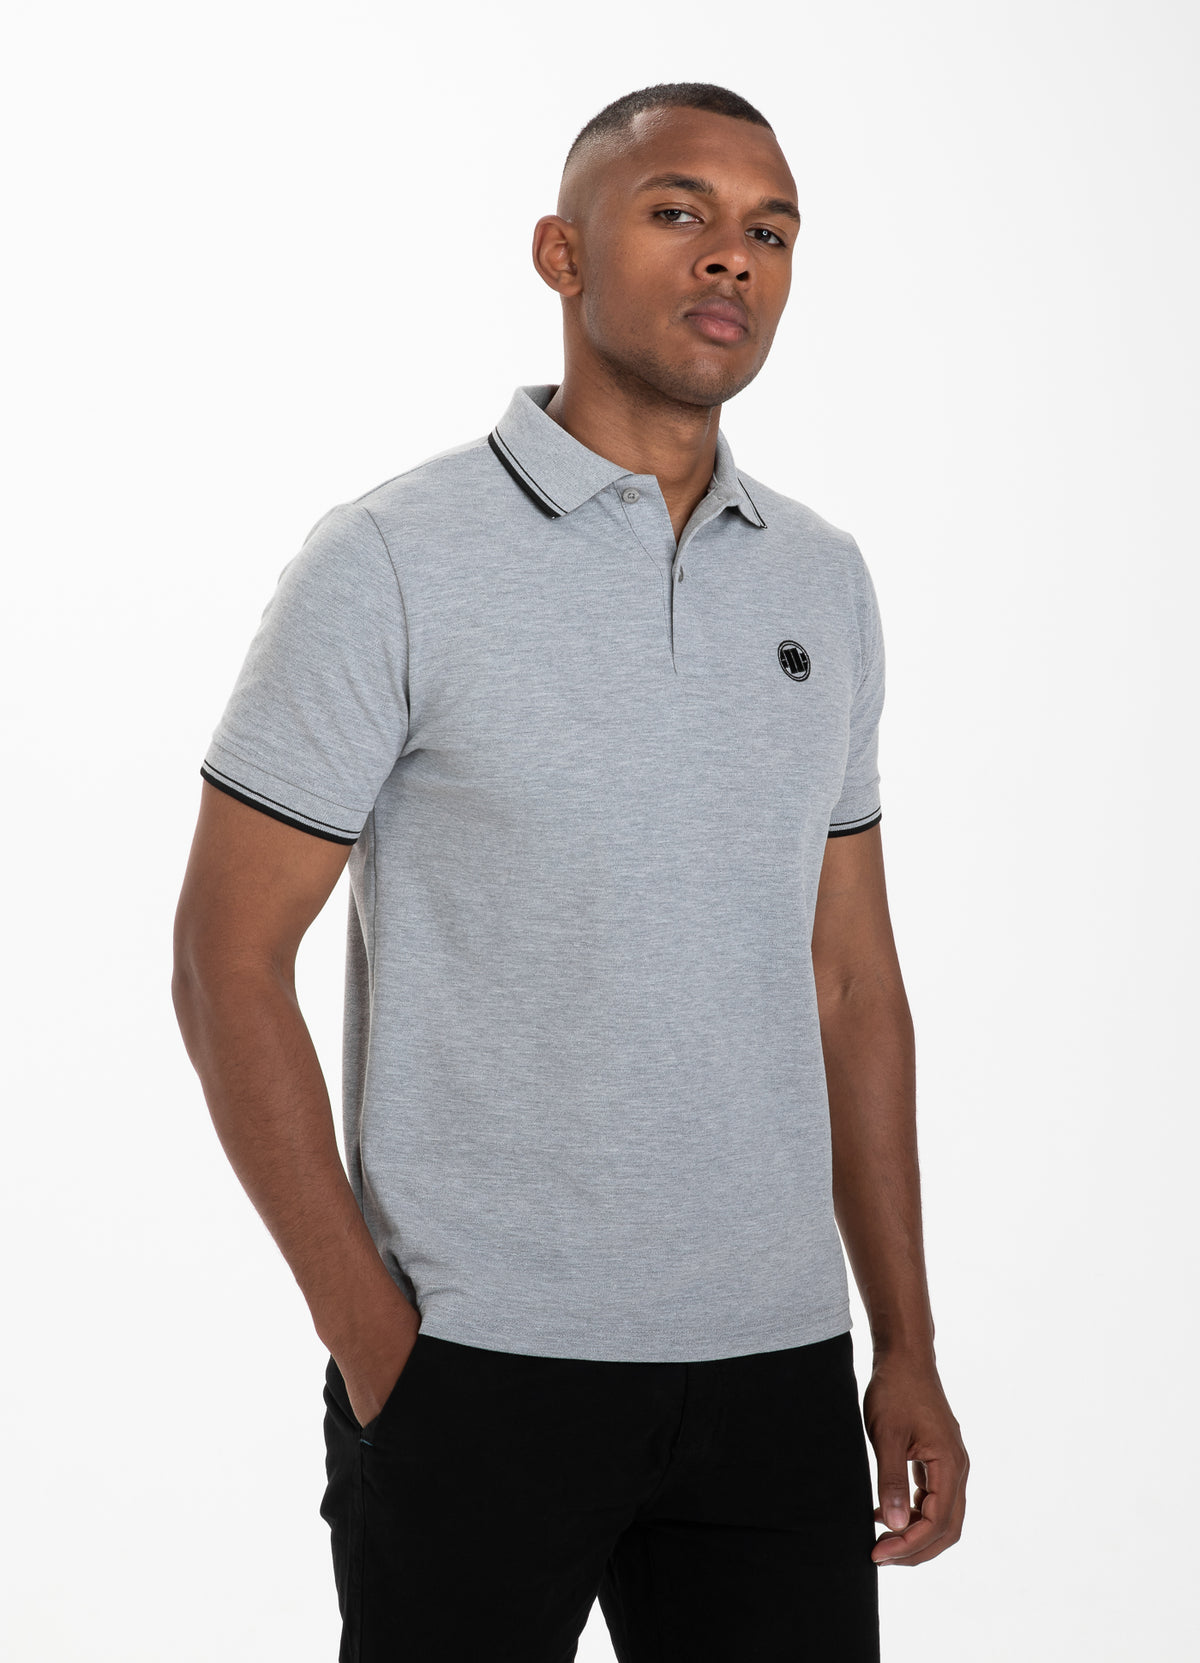 T-shirt POLO REGULAR STRIPES Grey Melange - Pitbull West Coast International Store 